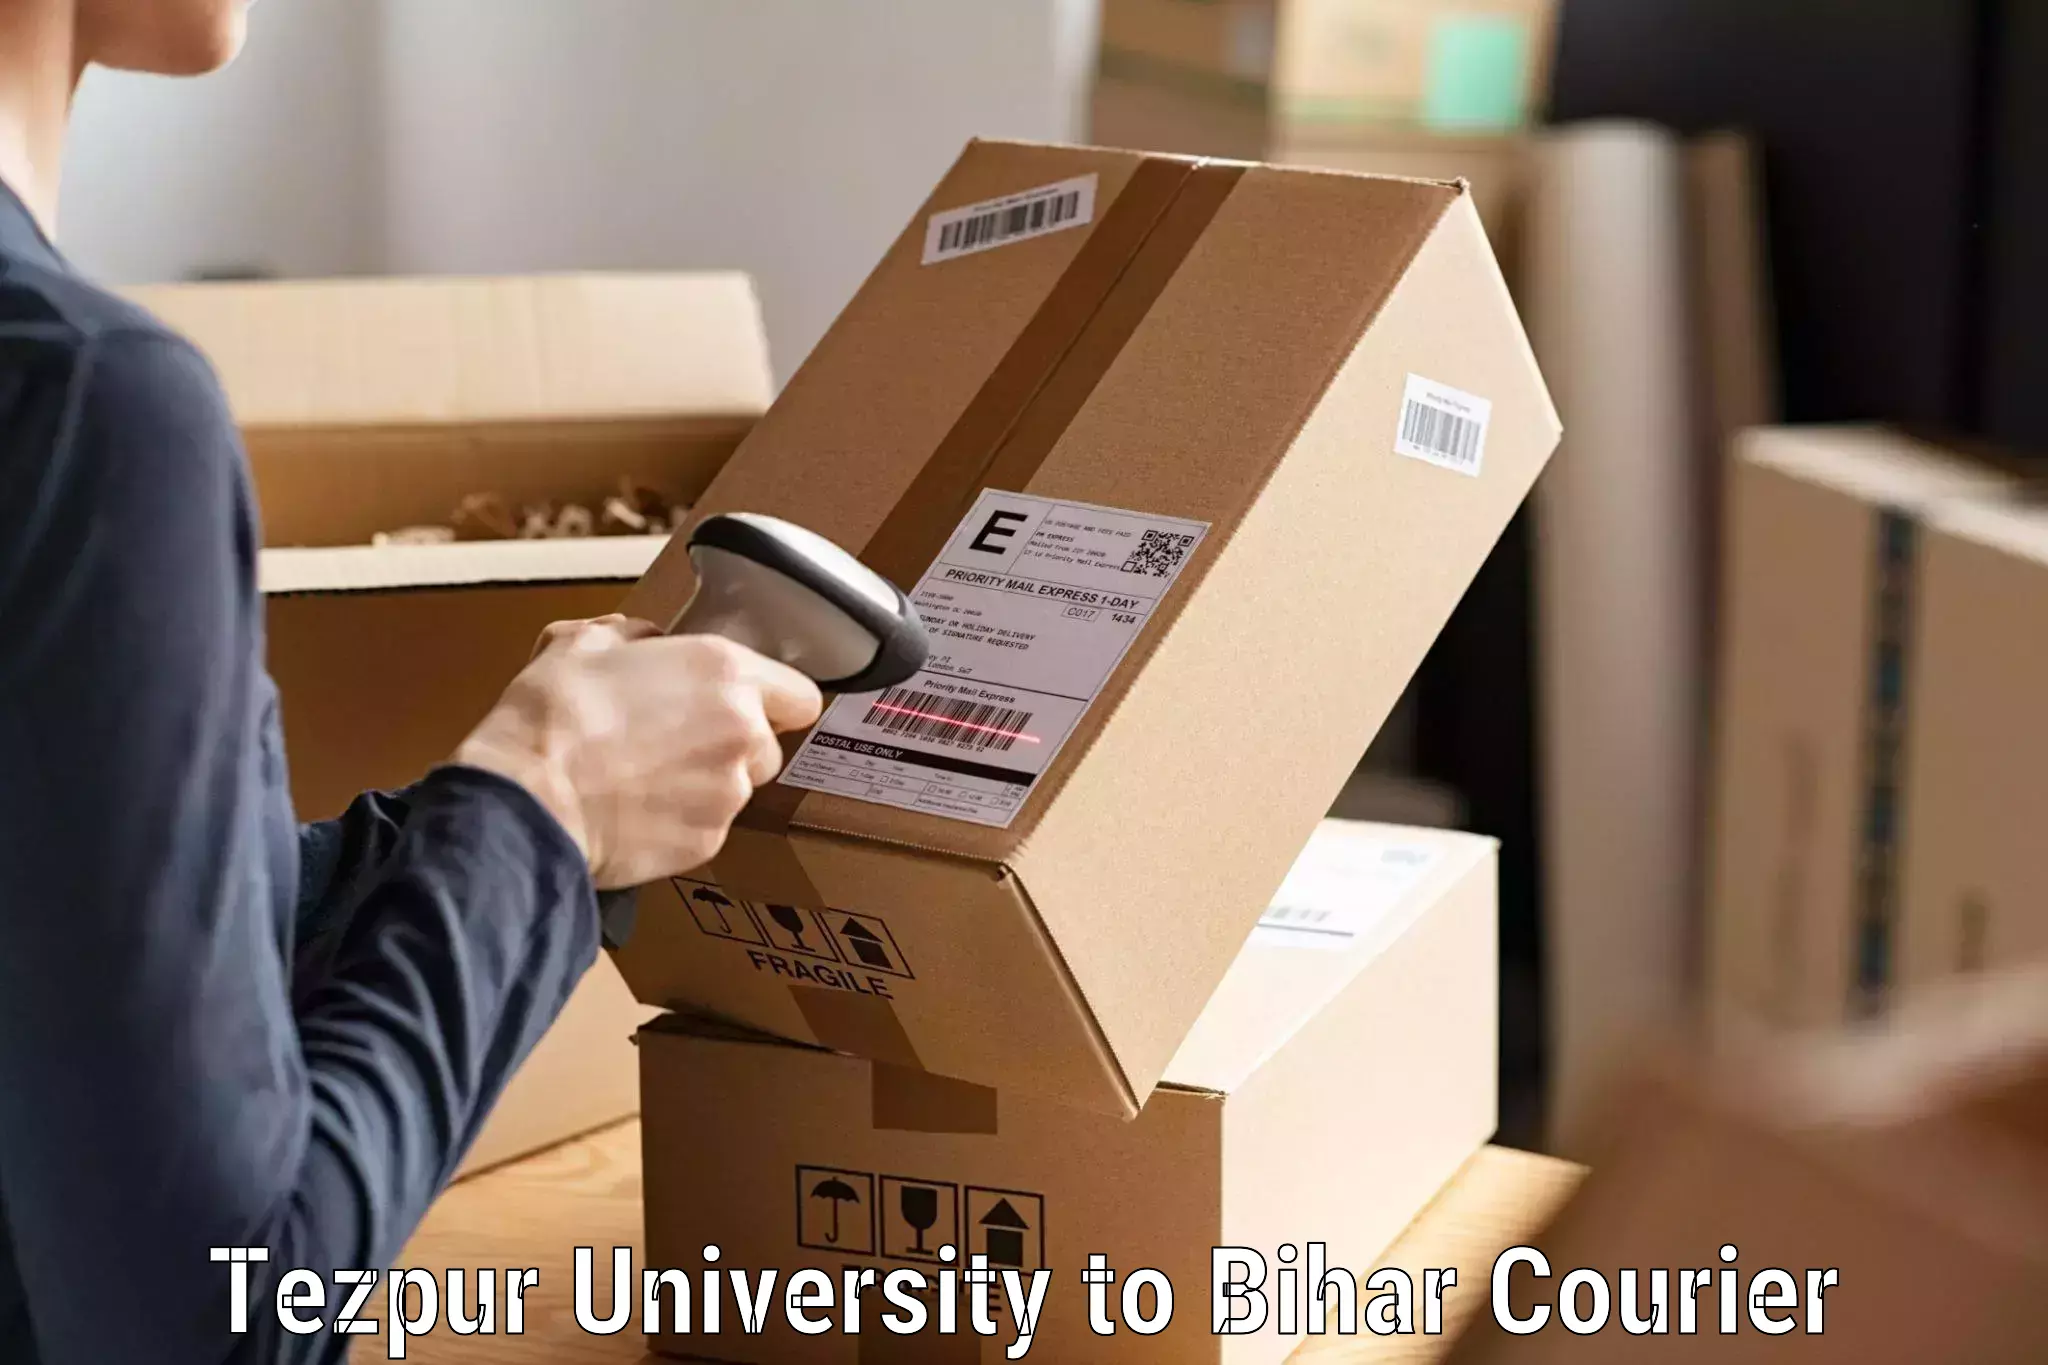 Multi-city courier Tezpur University to Bihar